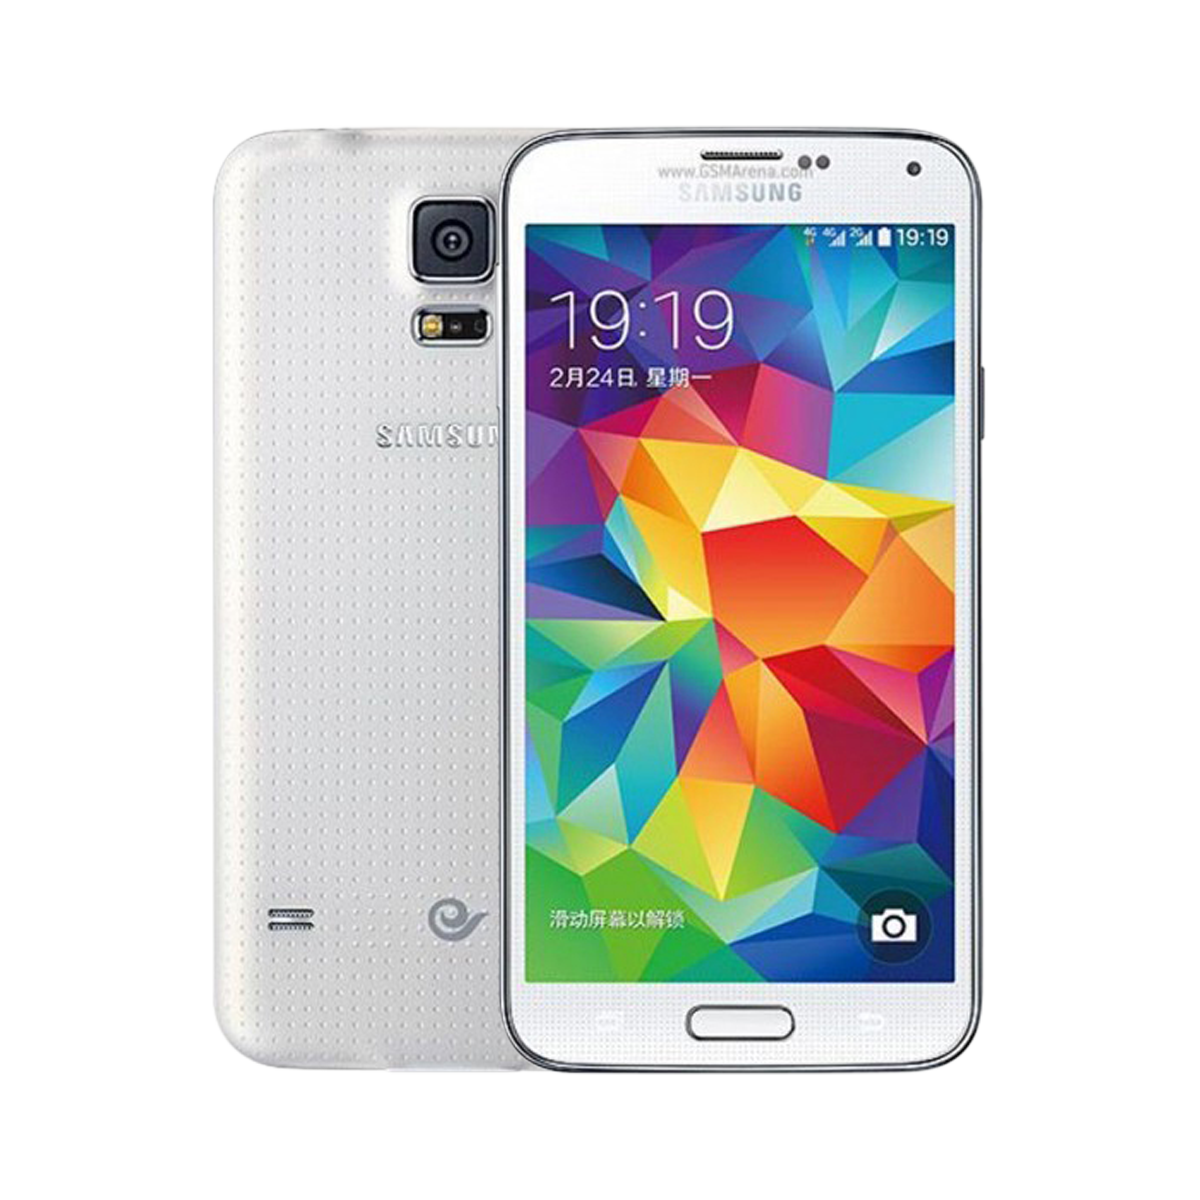 Samsung Galaxy S5 Mini (G800Y) - Good Condition